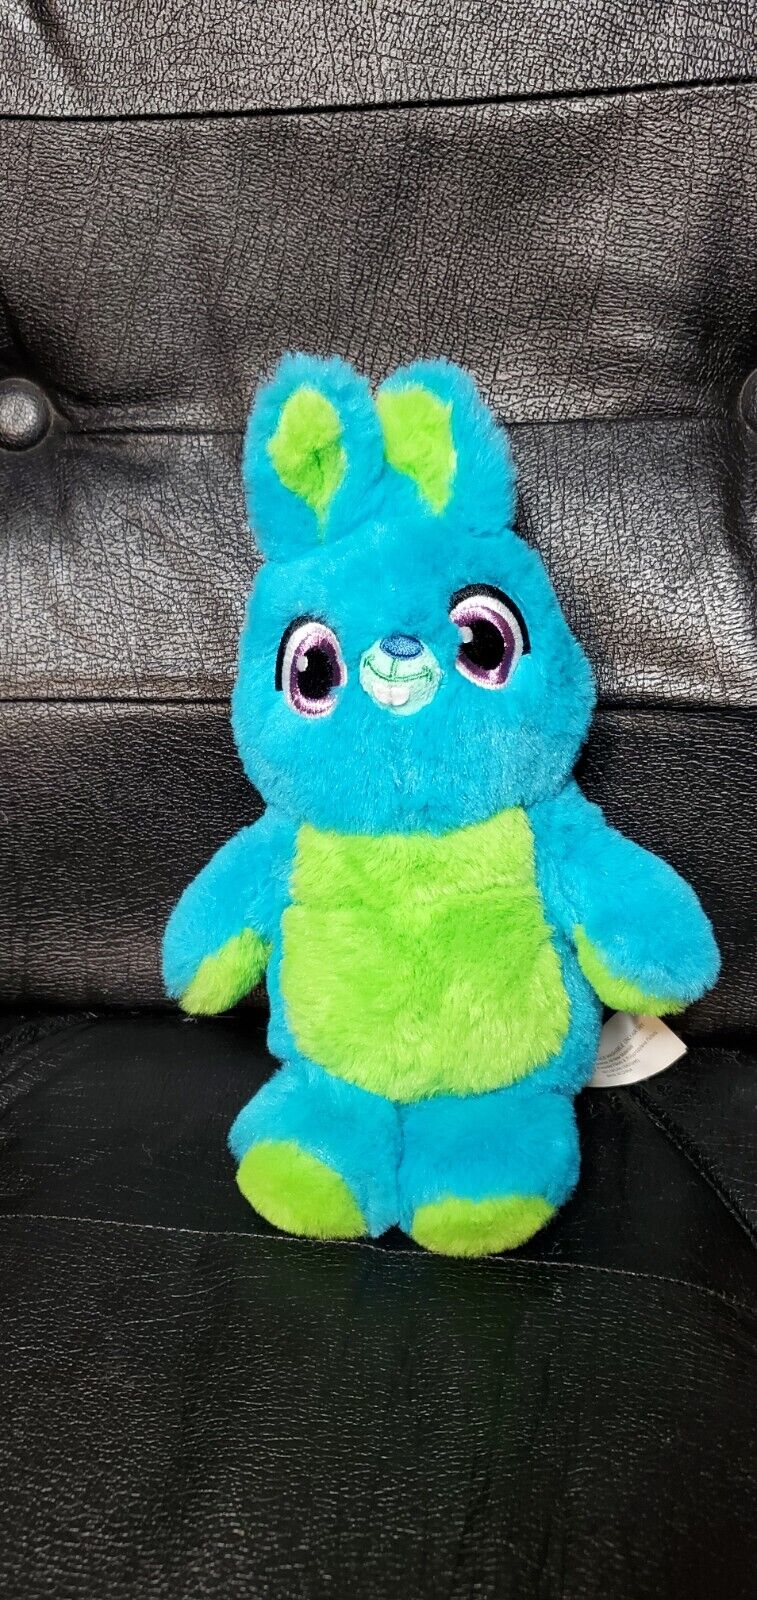 Disney Pixar Toy Story 4 Blue Green Bunny Plush 10" Stuffed Animal 